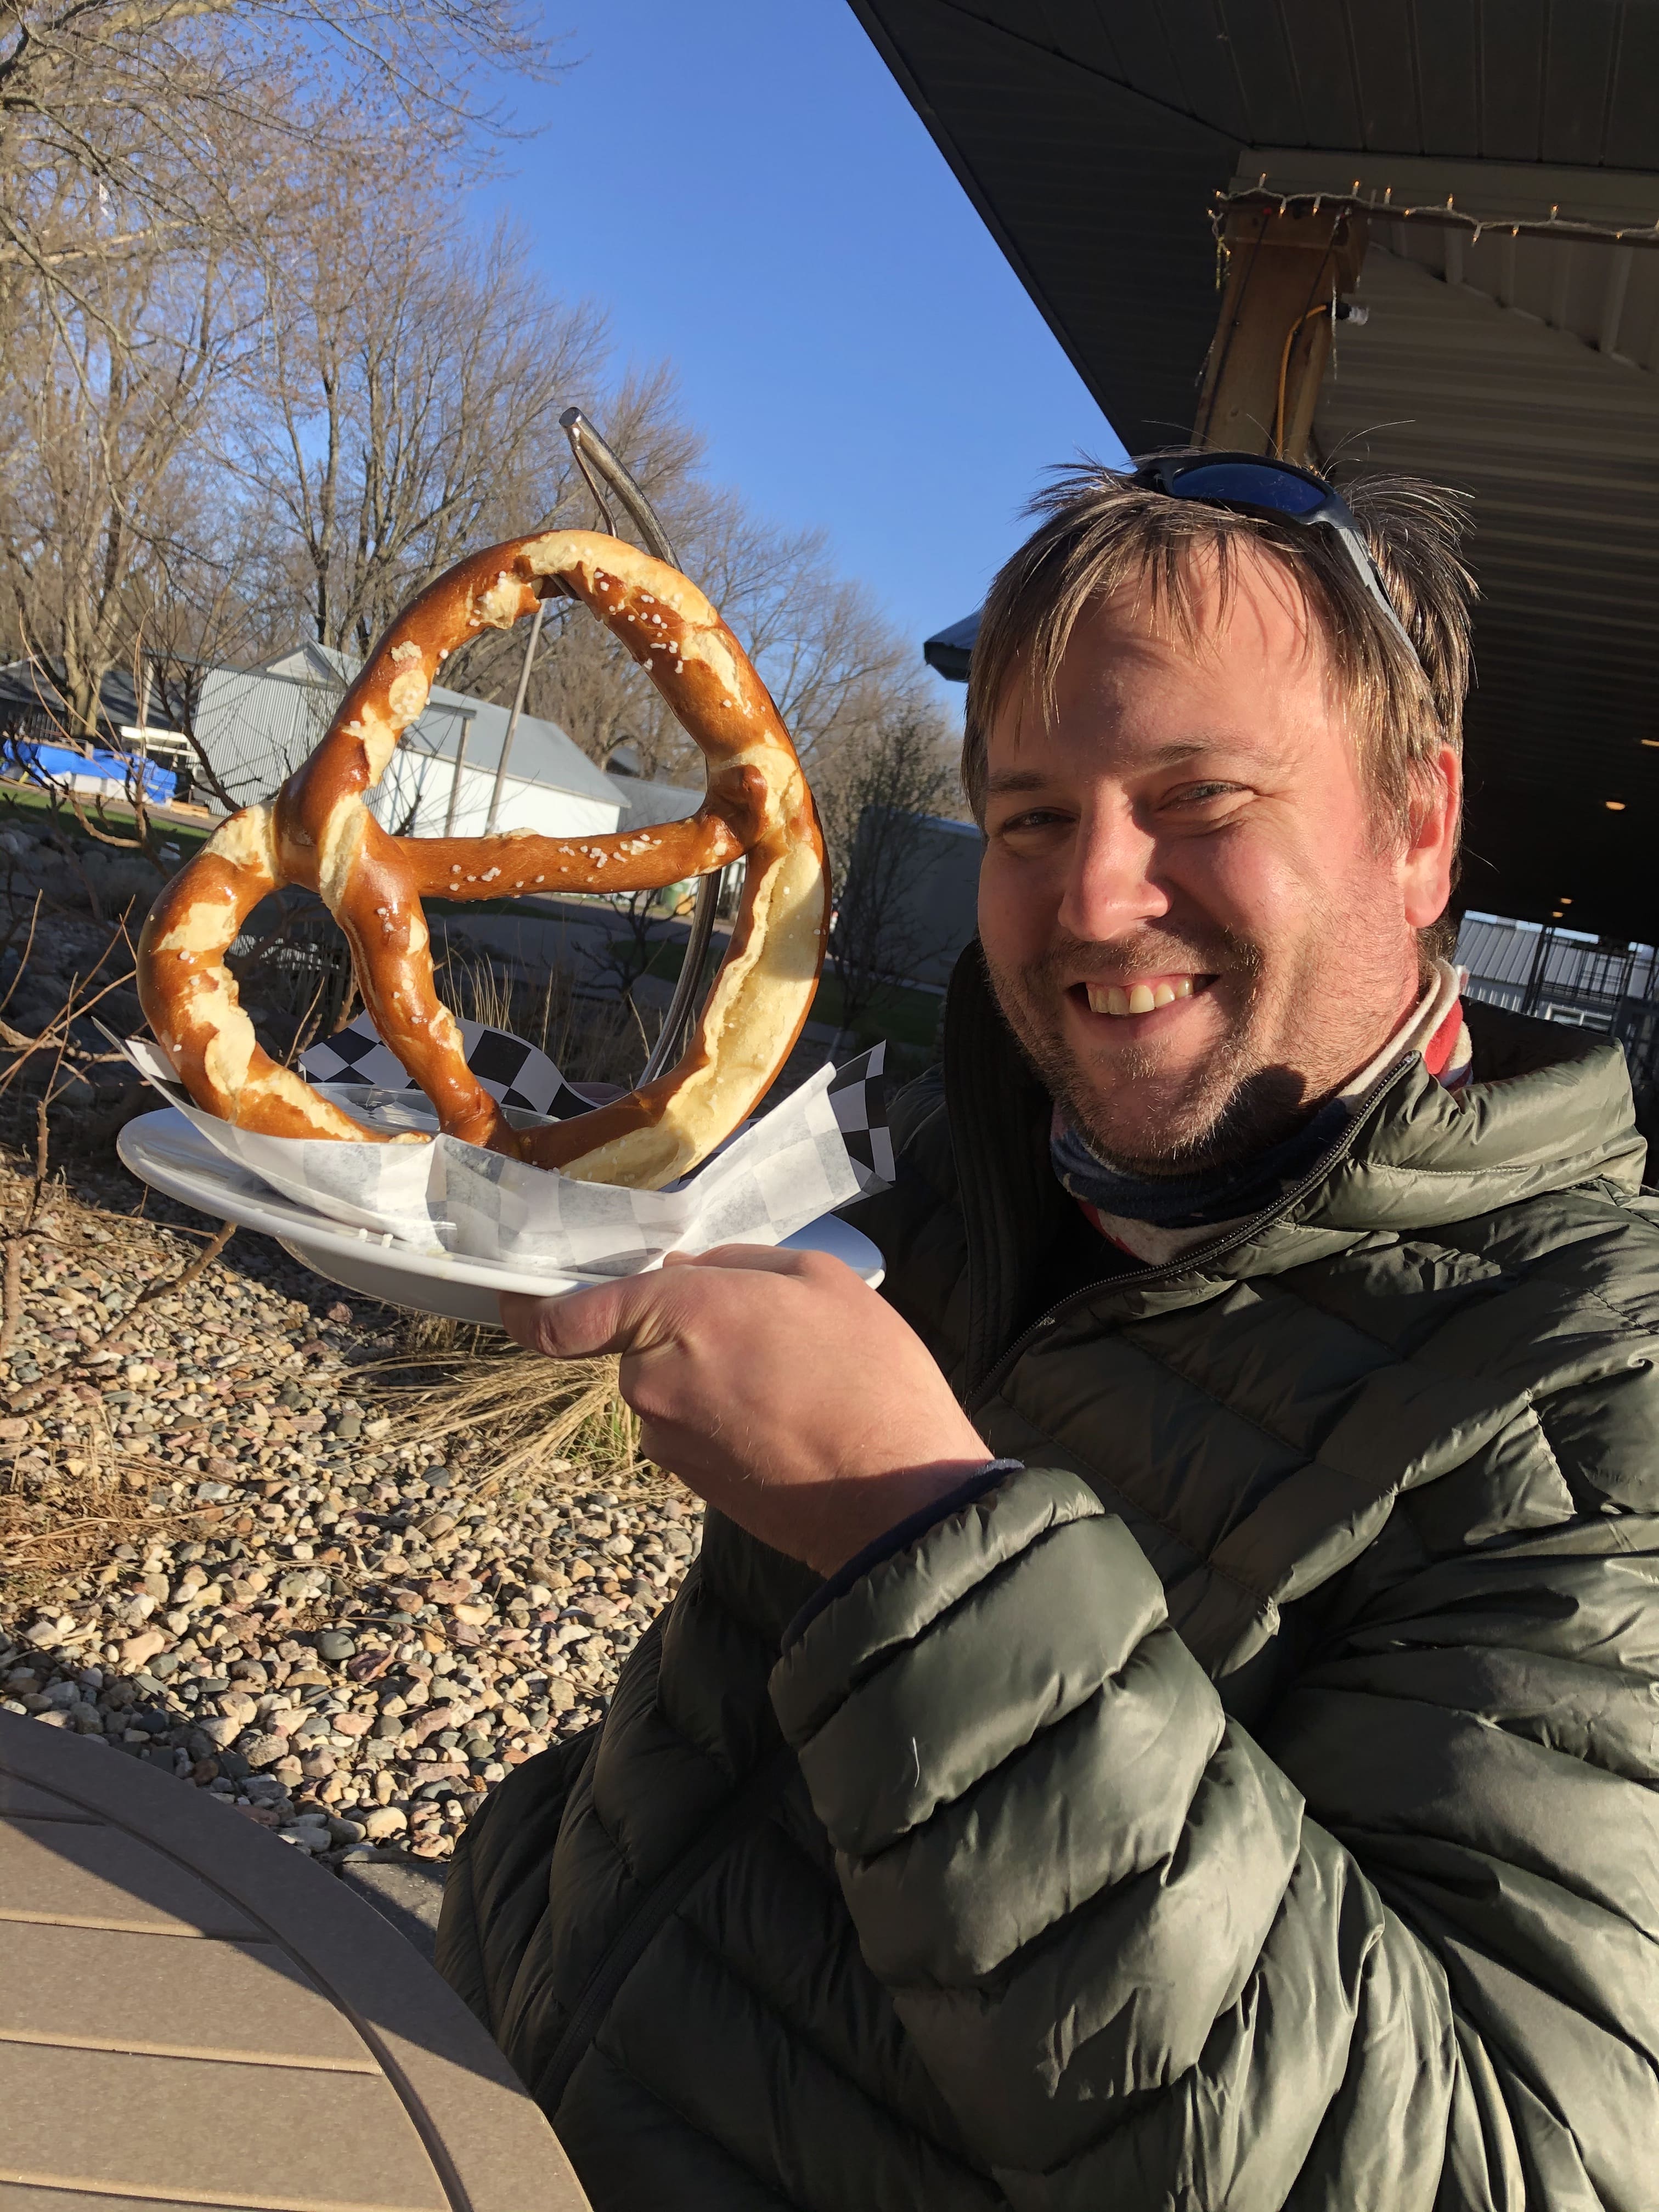 Bryan holding up a giant pretzel